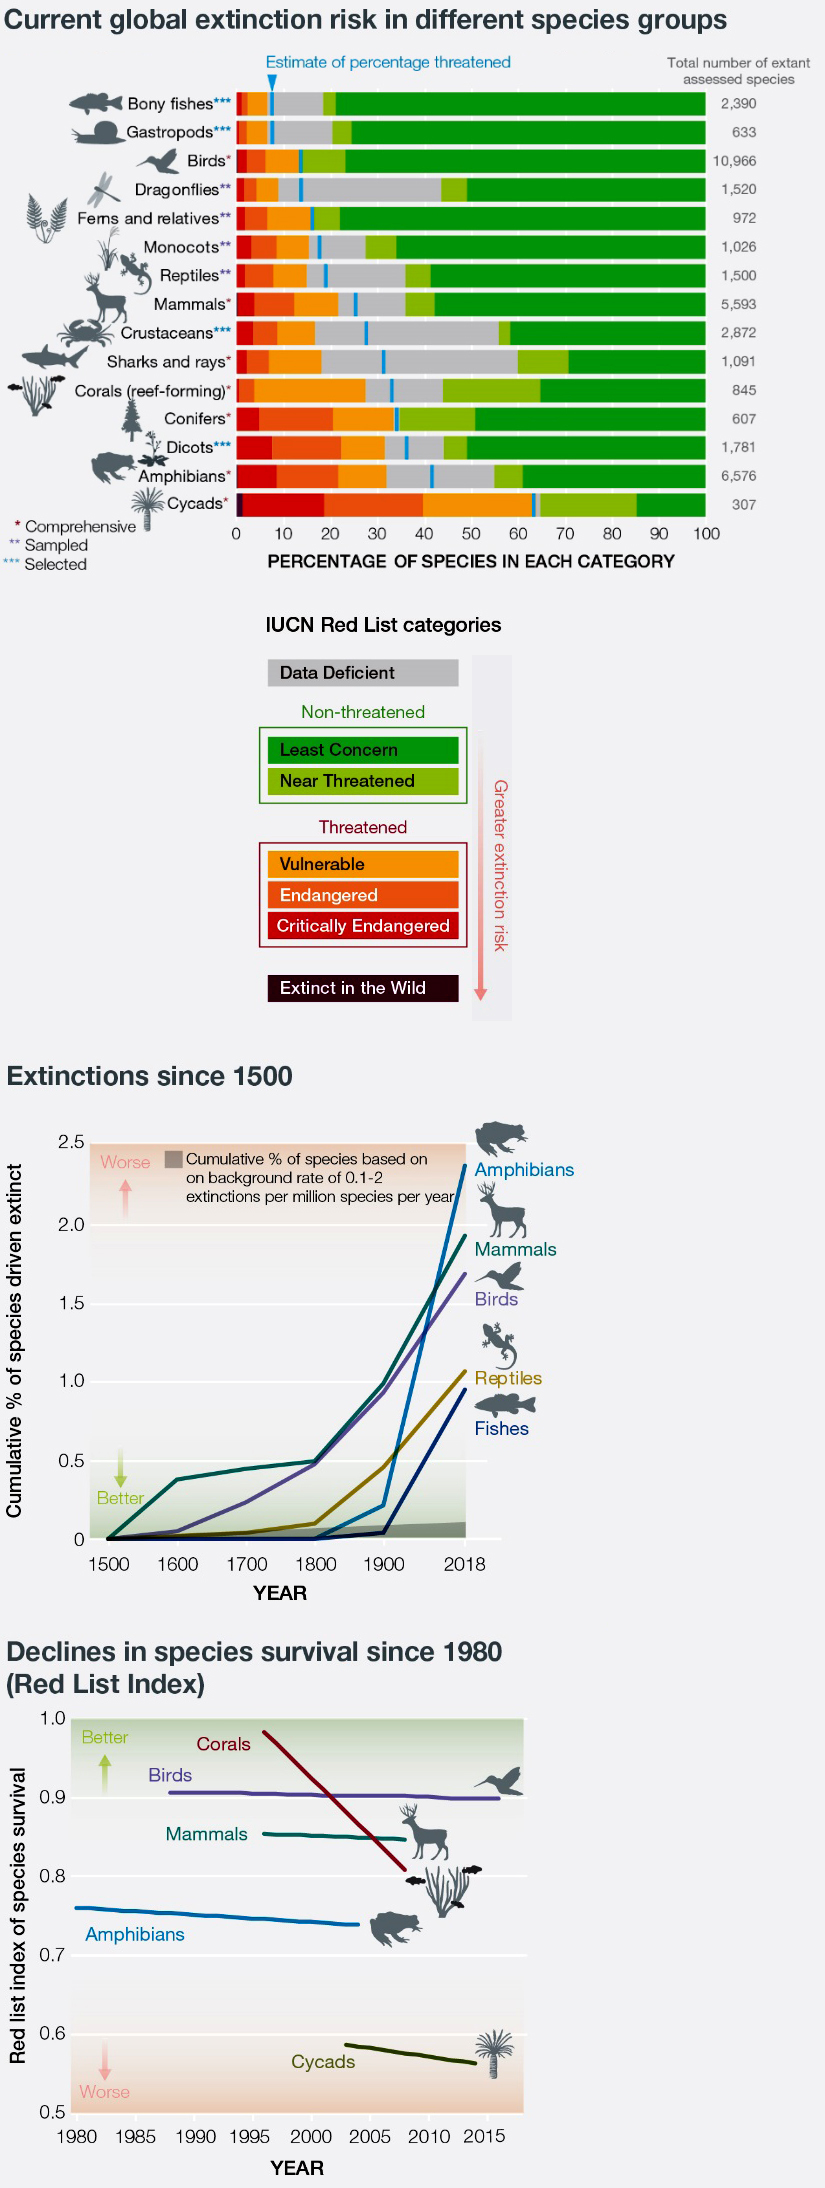 Global extincion rates in different species groups